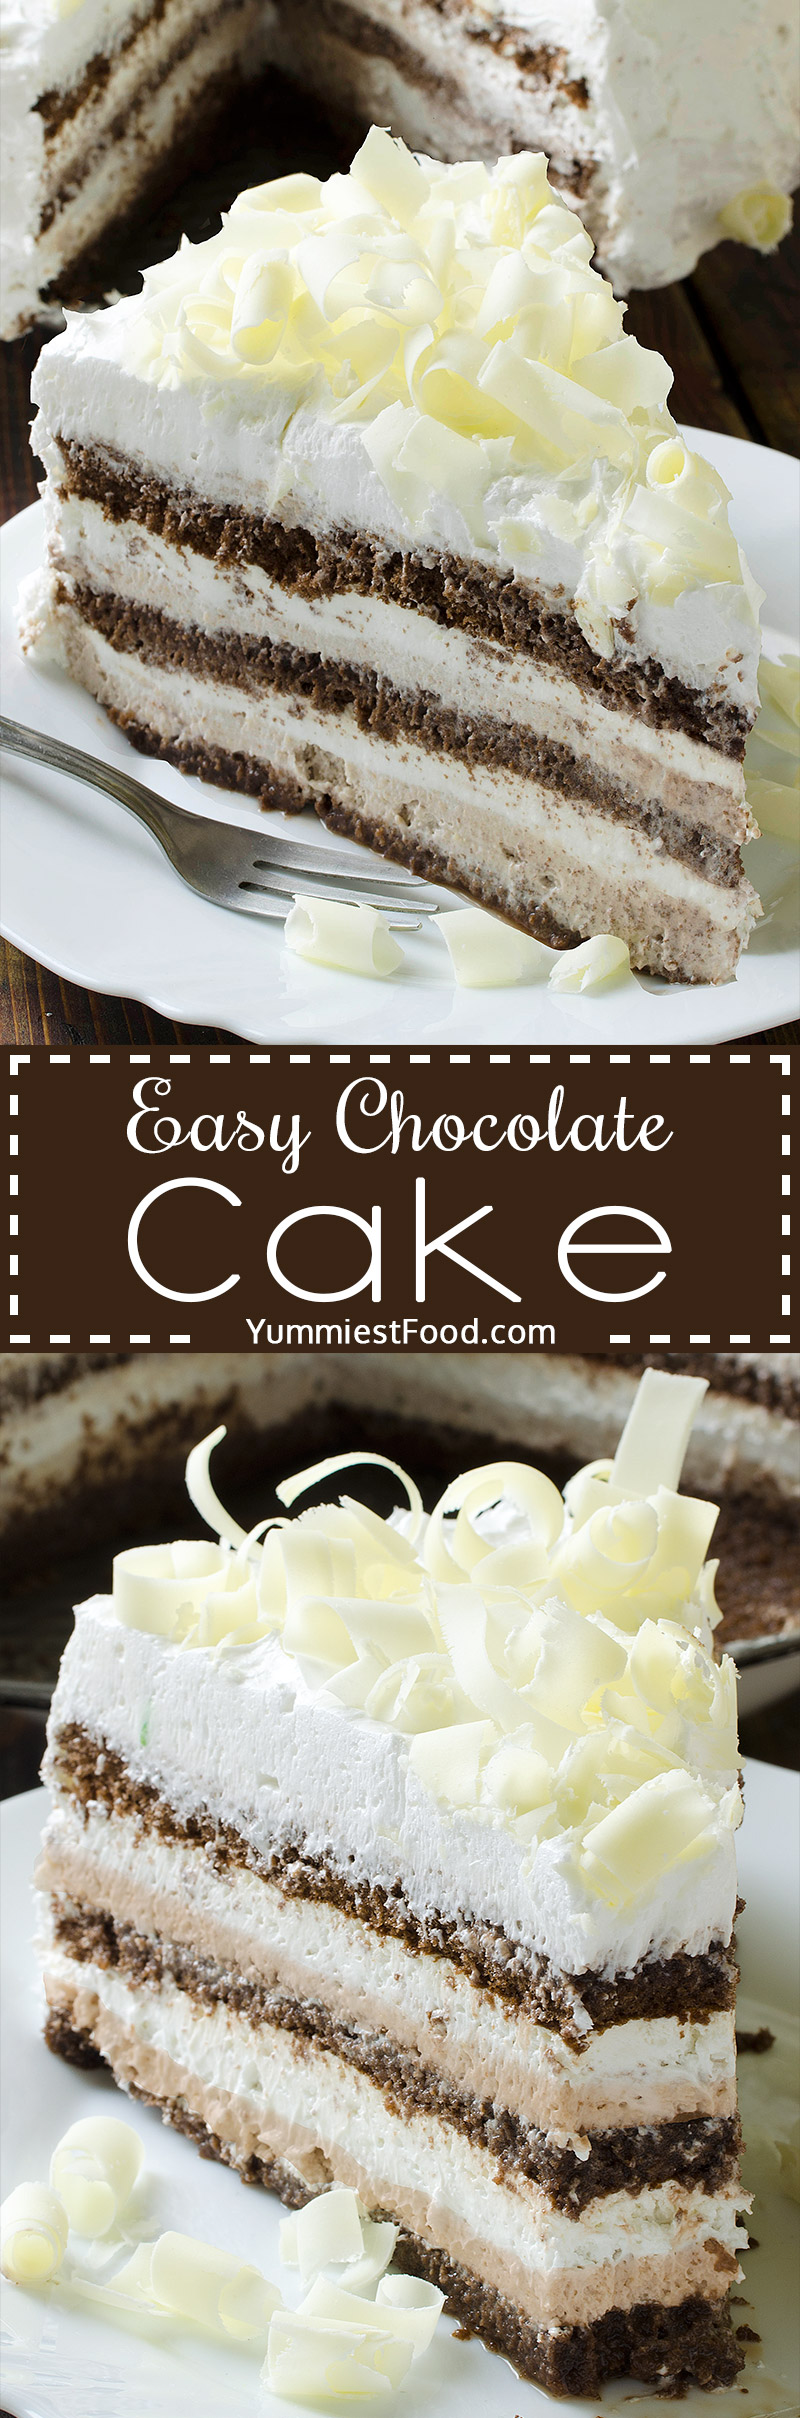 So creamy, soft and tasty - Easy Chocolate Cake